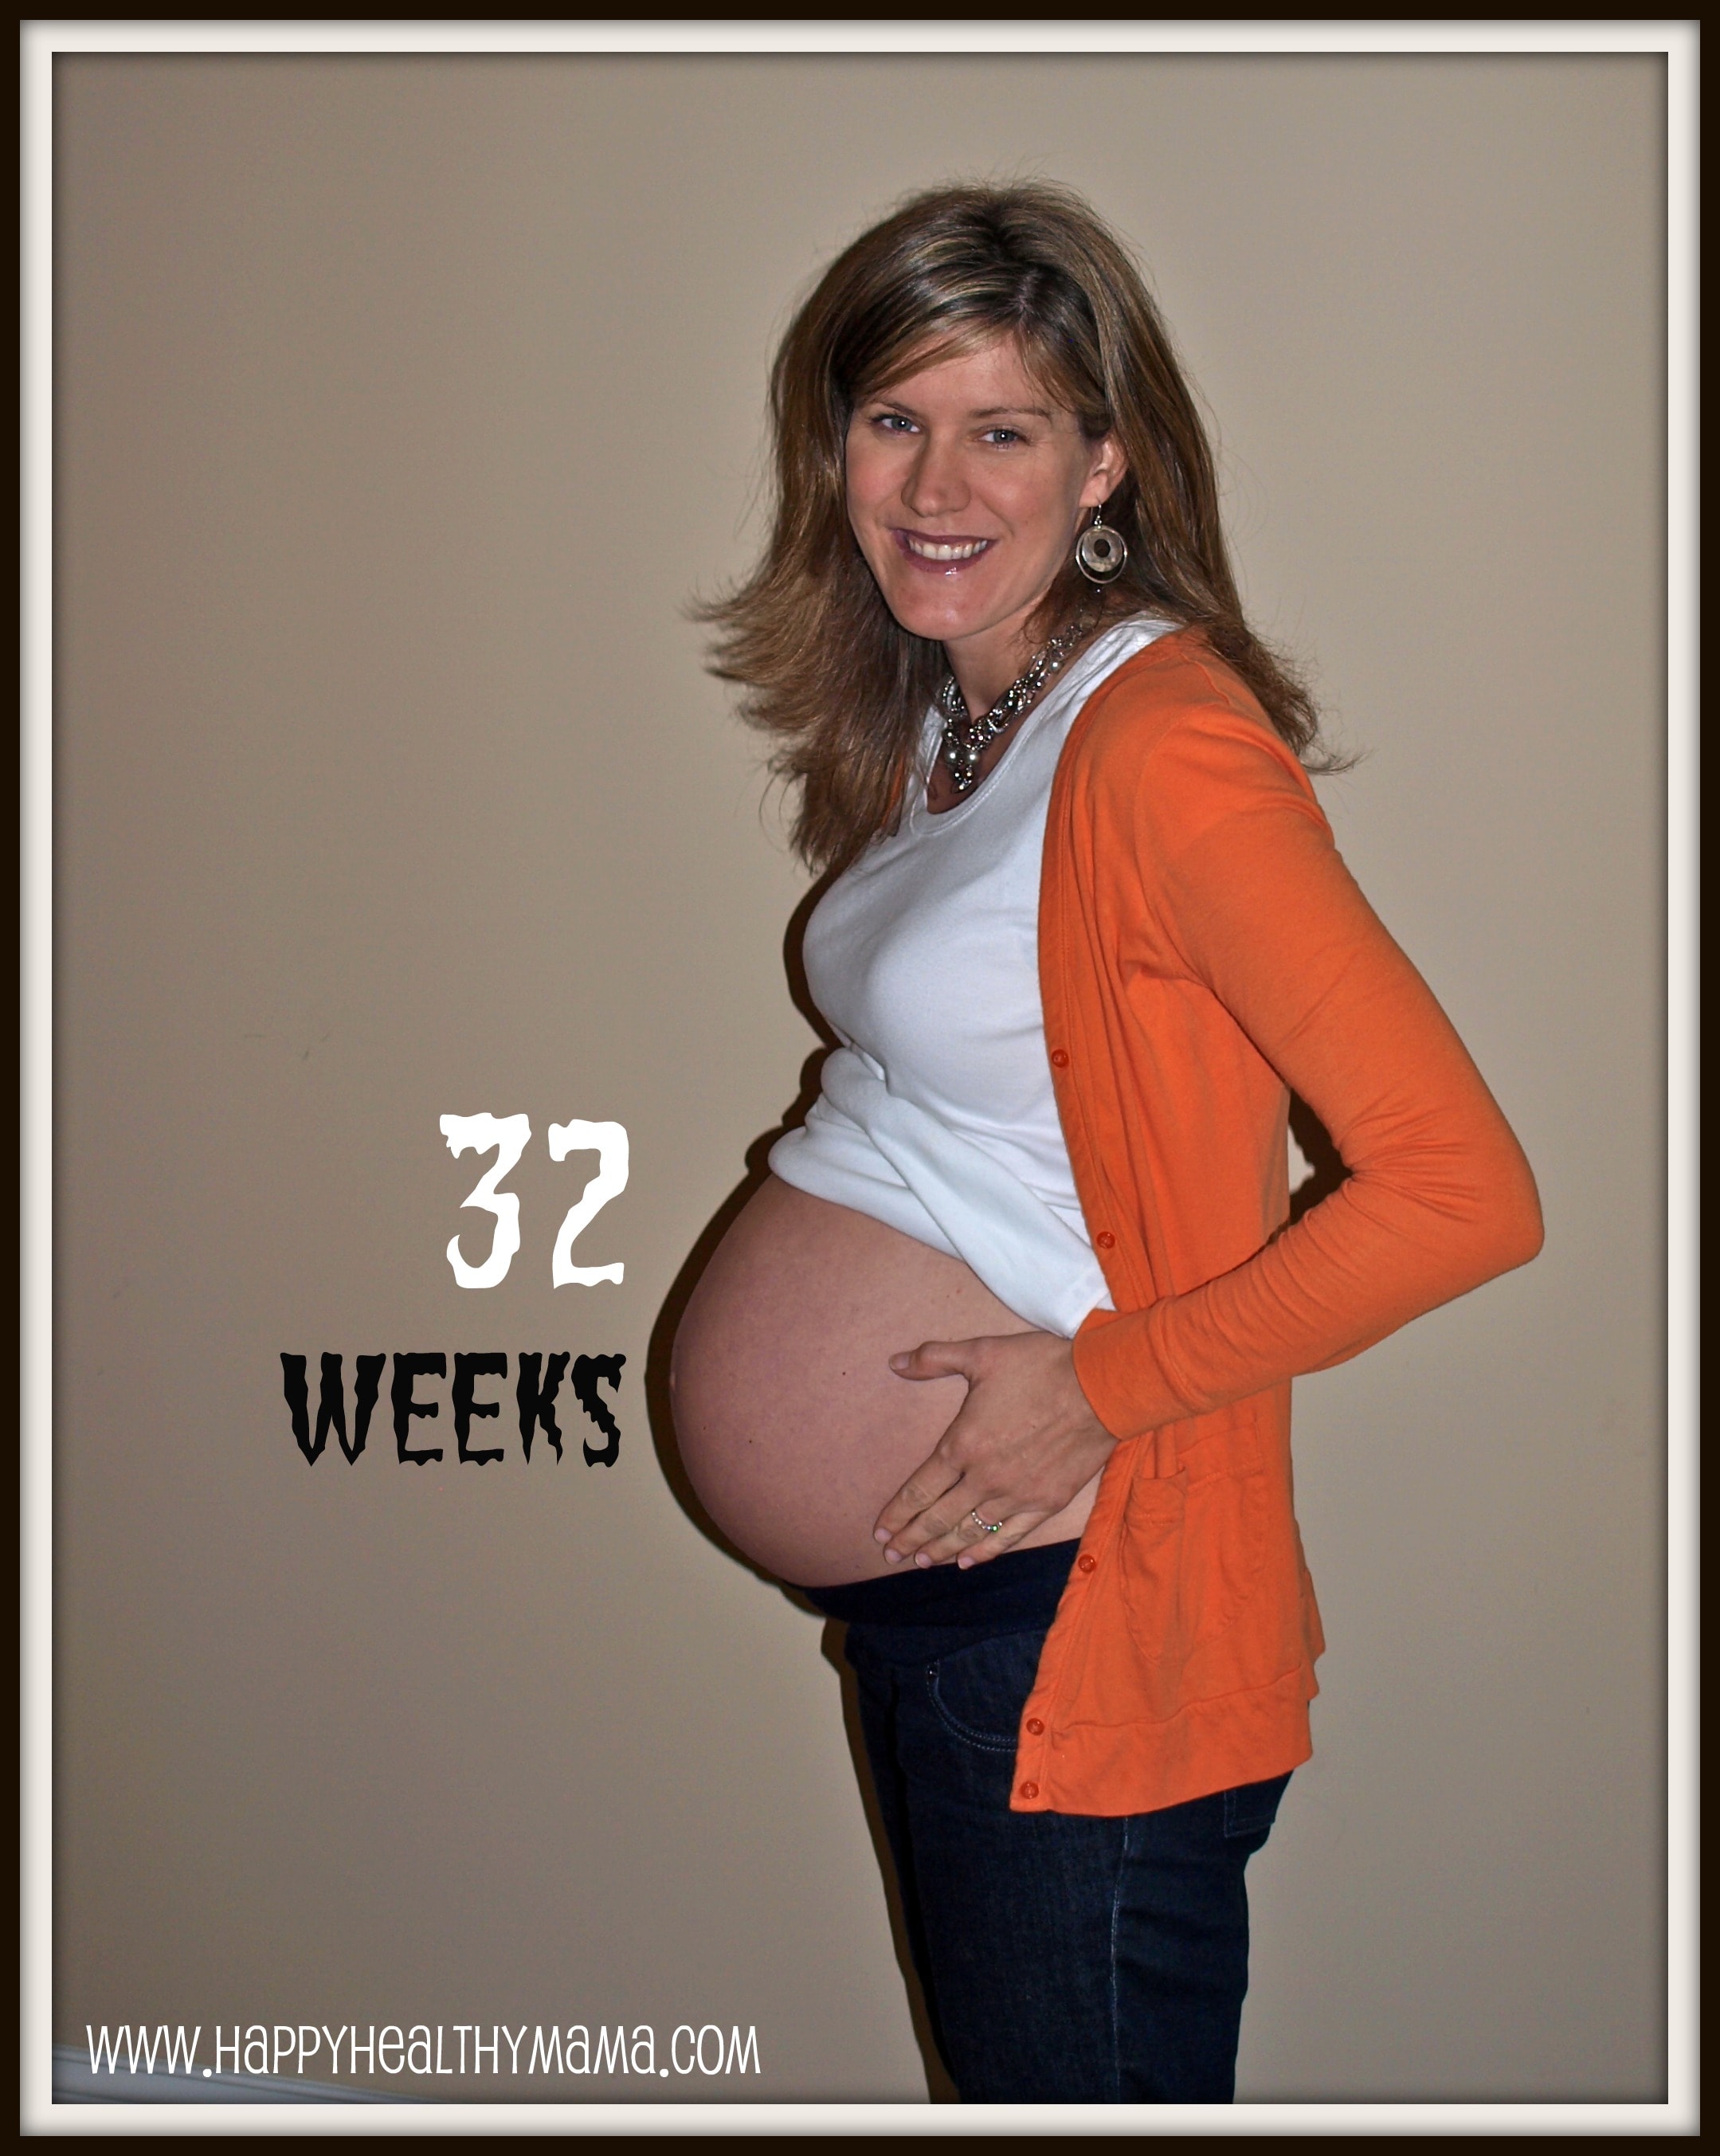 presentation at 32 weeks pregnant